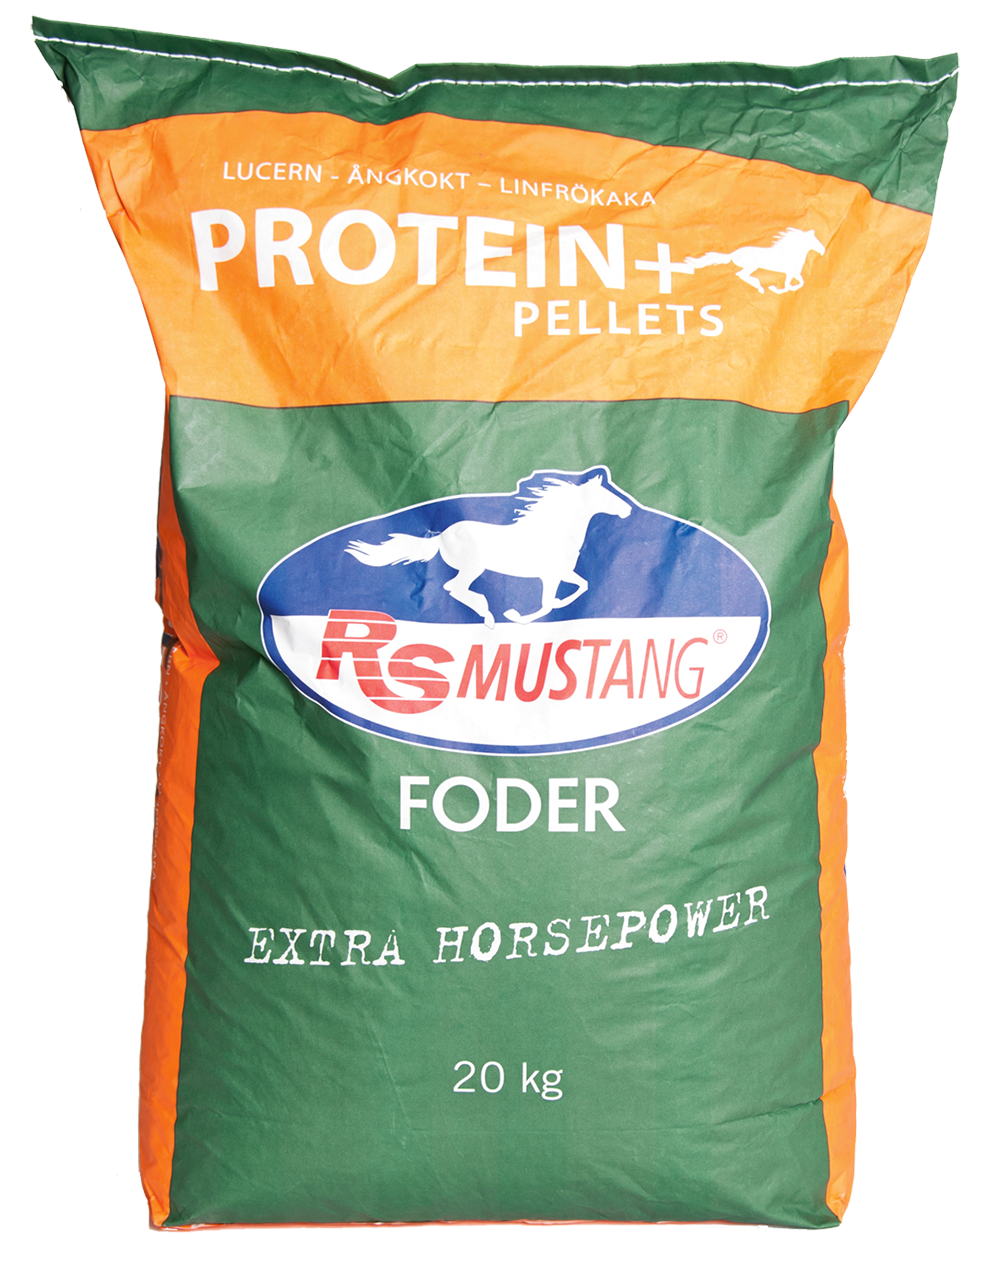 Mustang Protein+ Pellets - 20kg